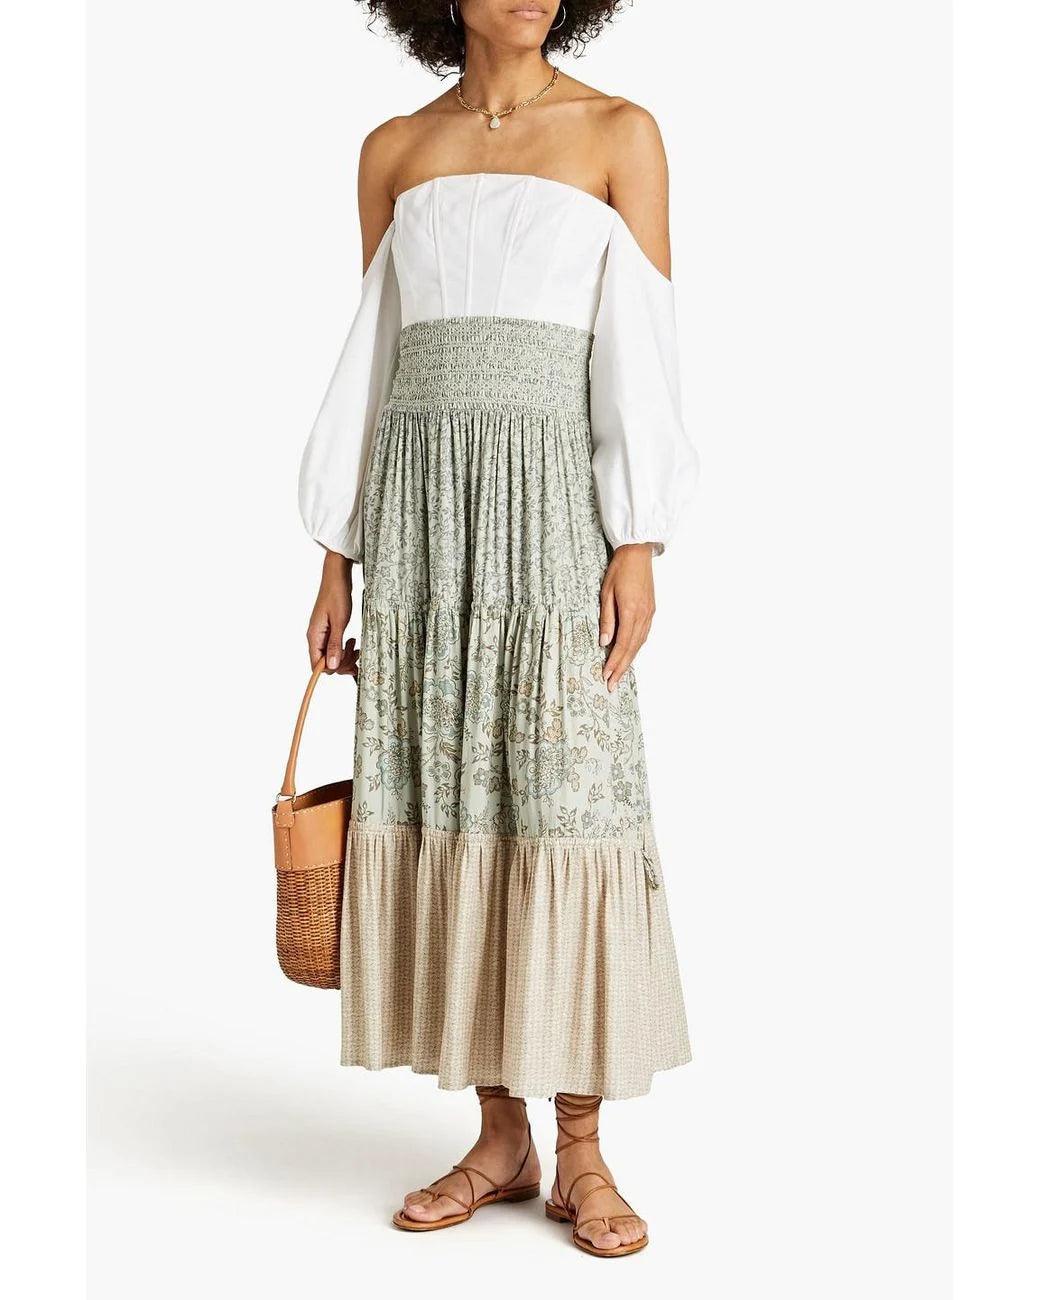 Emica Mina Shirred Floral-print Modal Midi Skirt - Endless